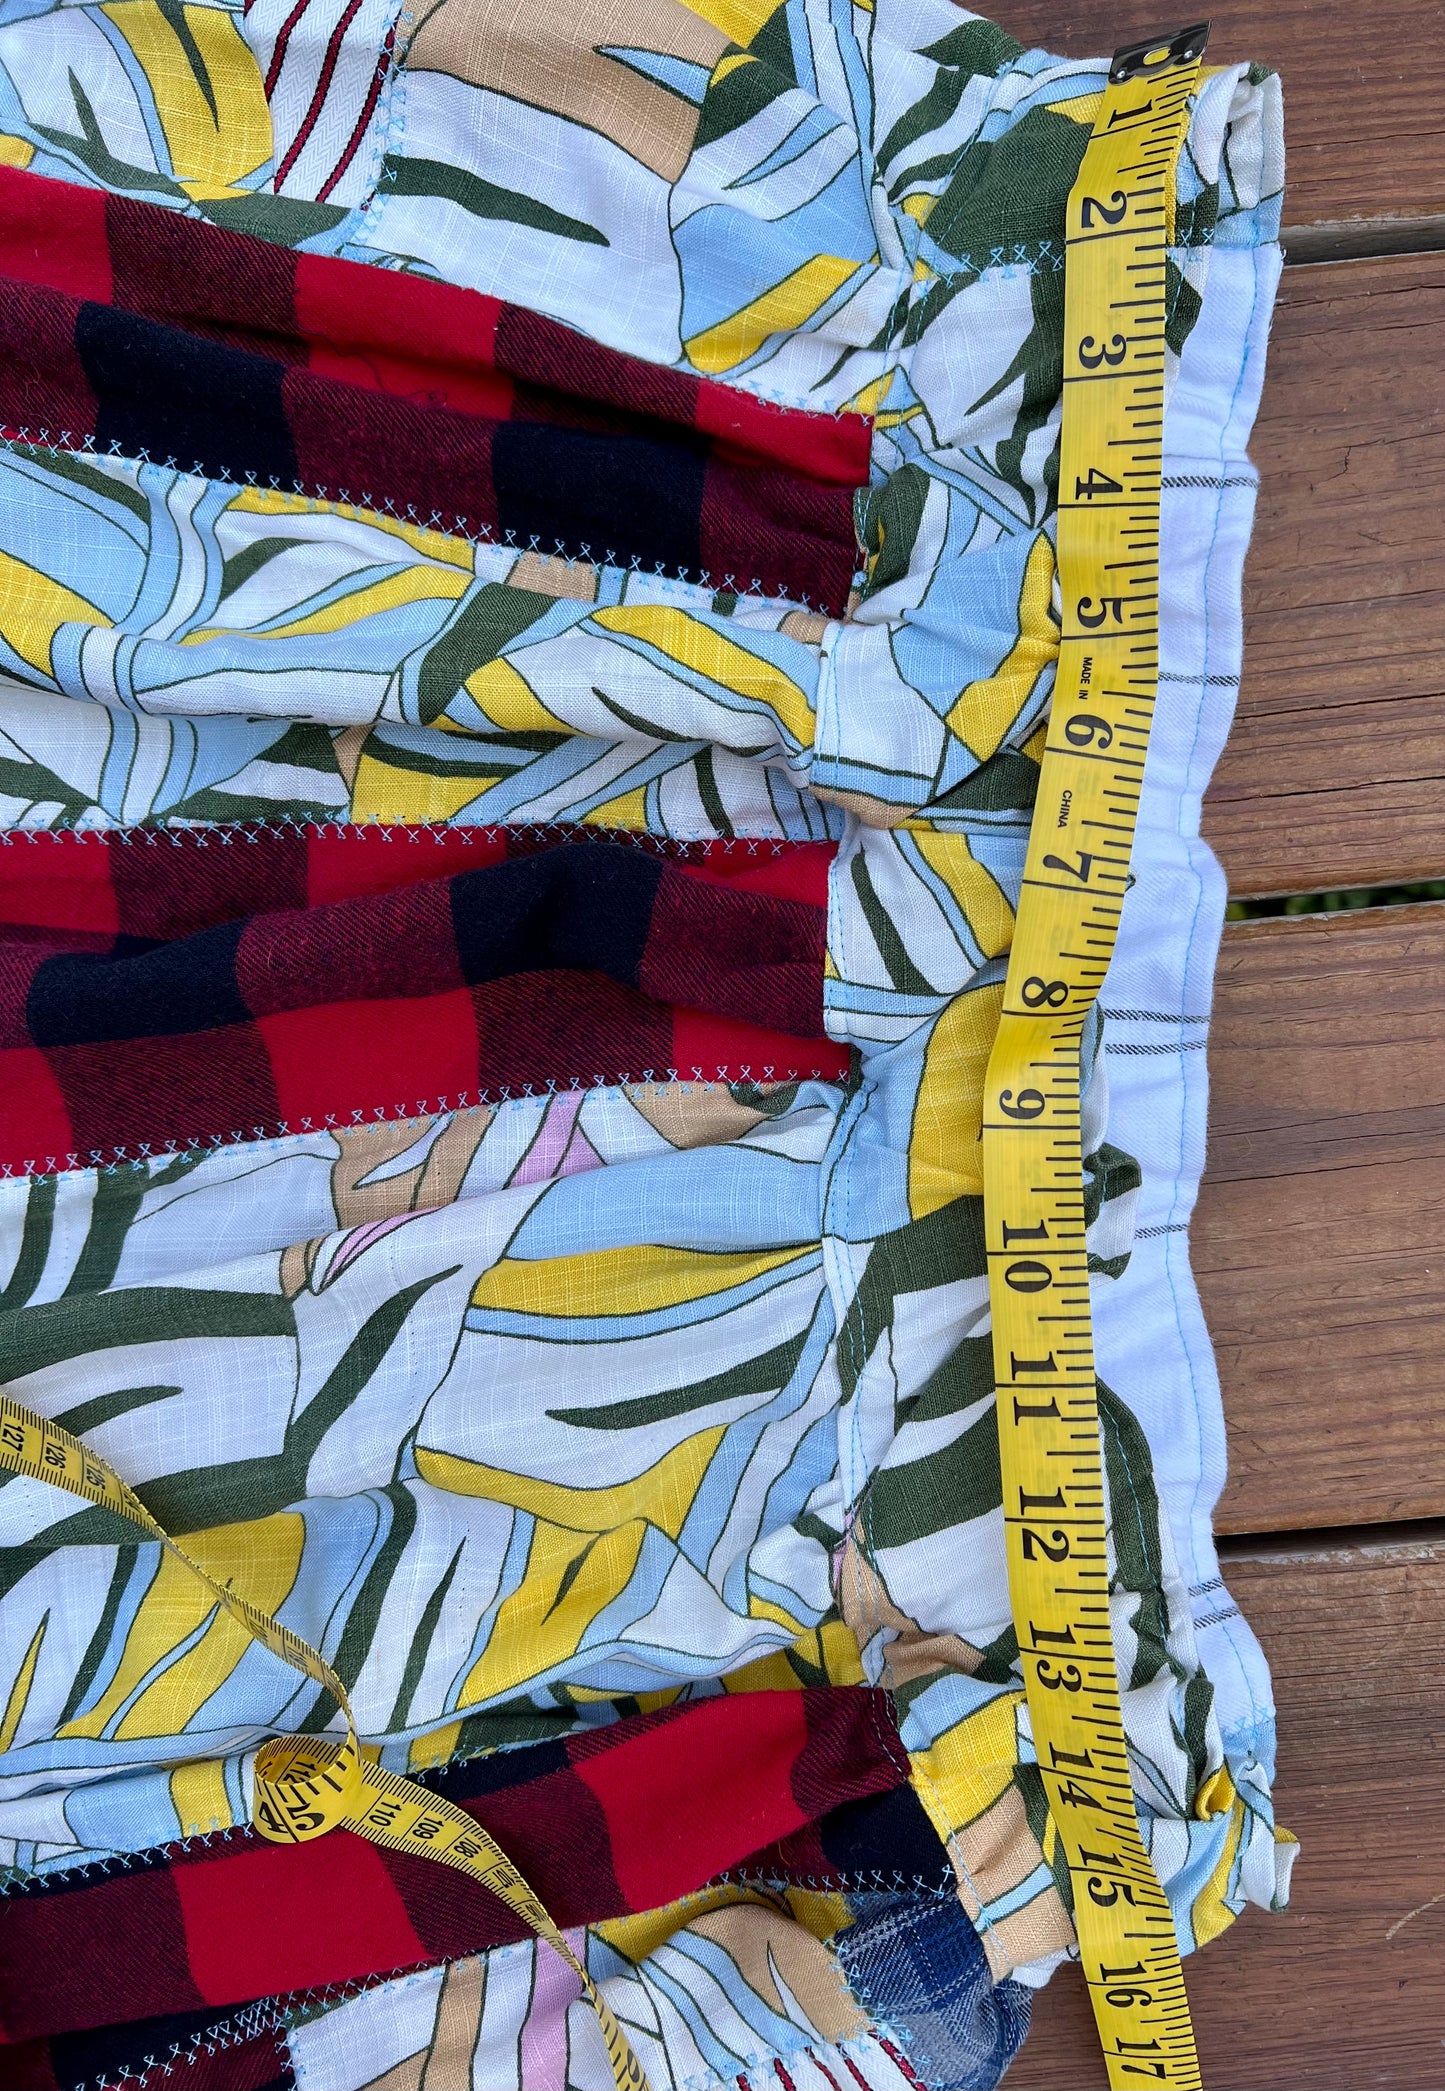 plaid patchwork skirt waist closeup with measuring tape across elastic waist hem